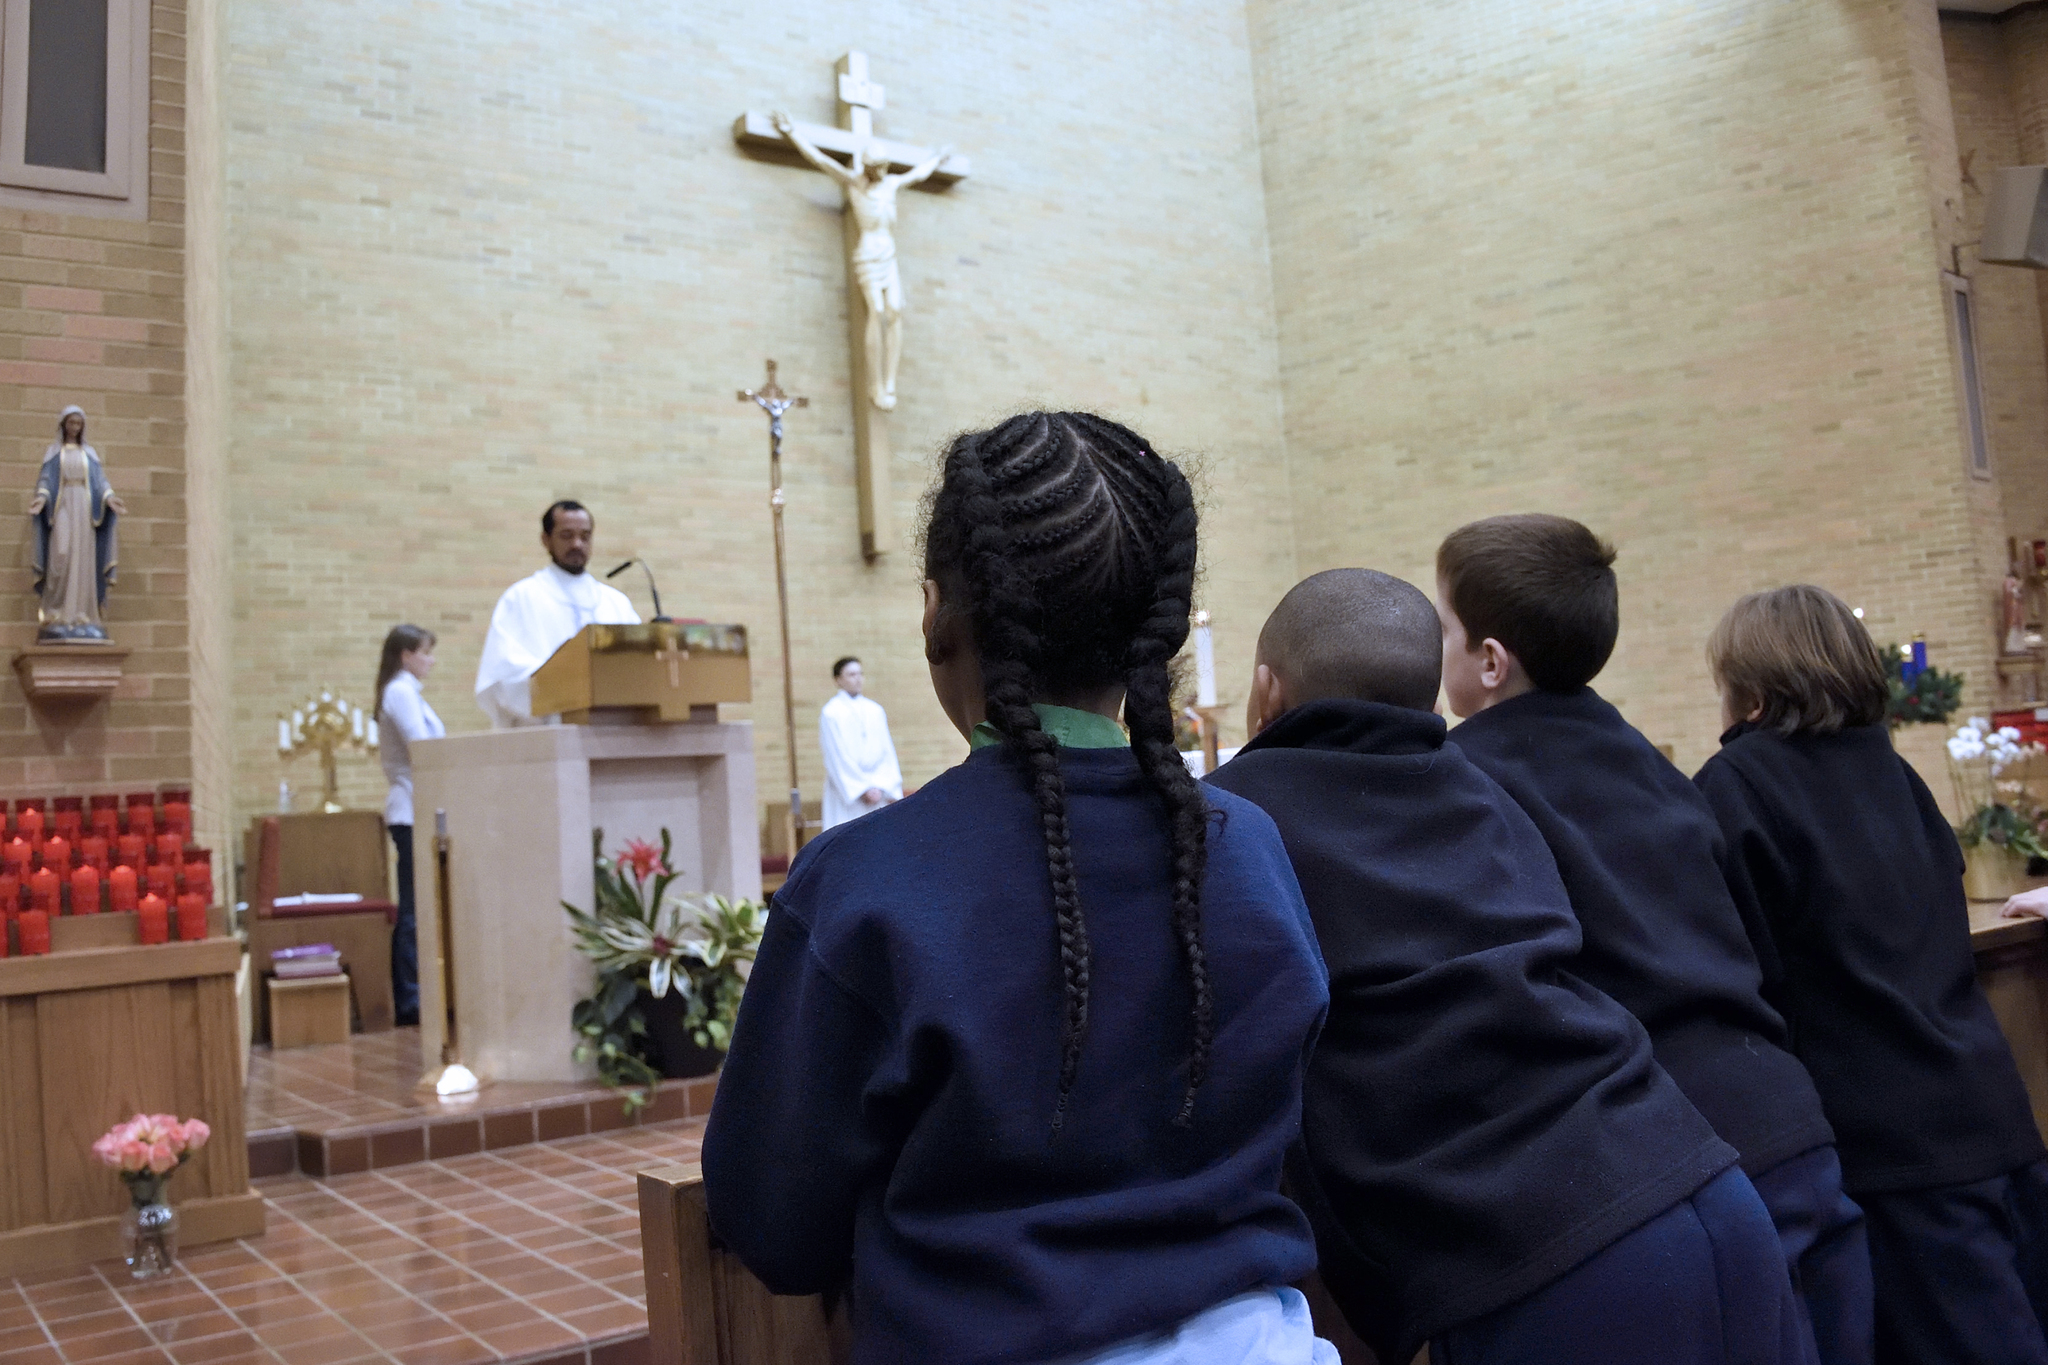 Catholic school students in prayer